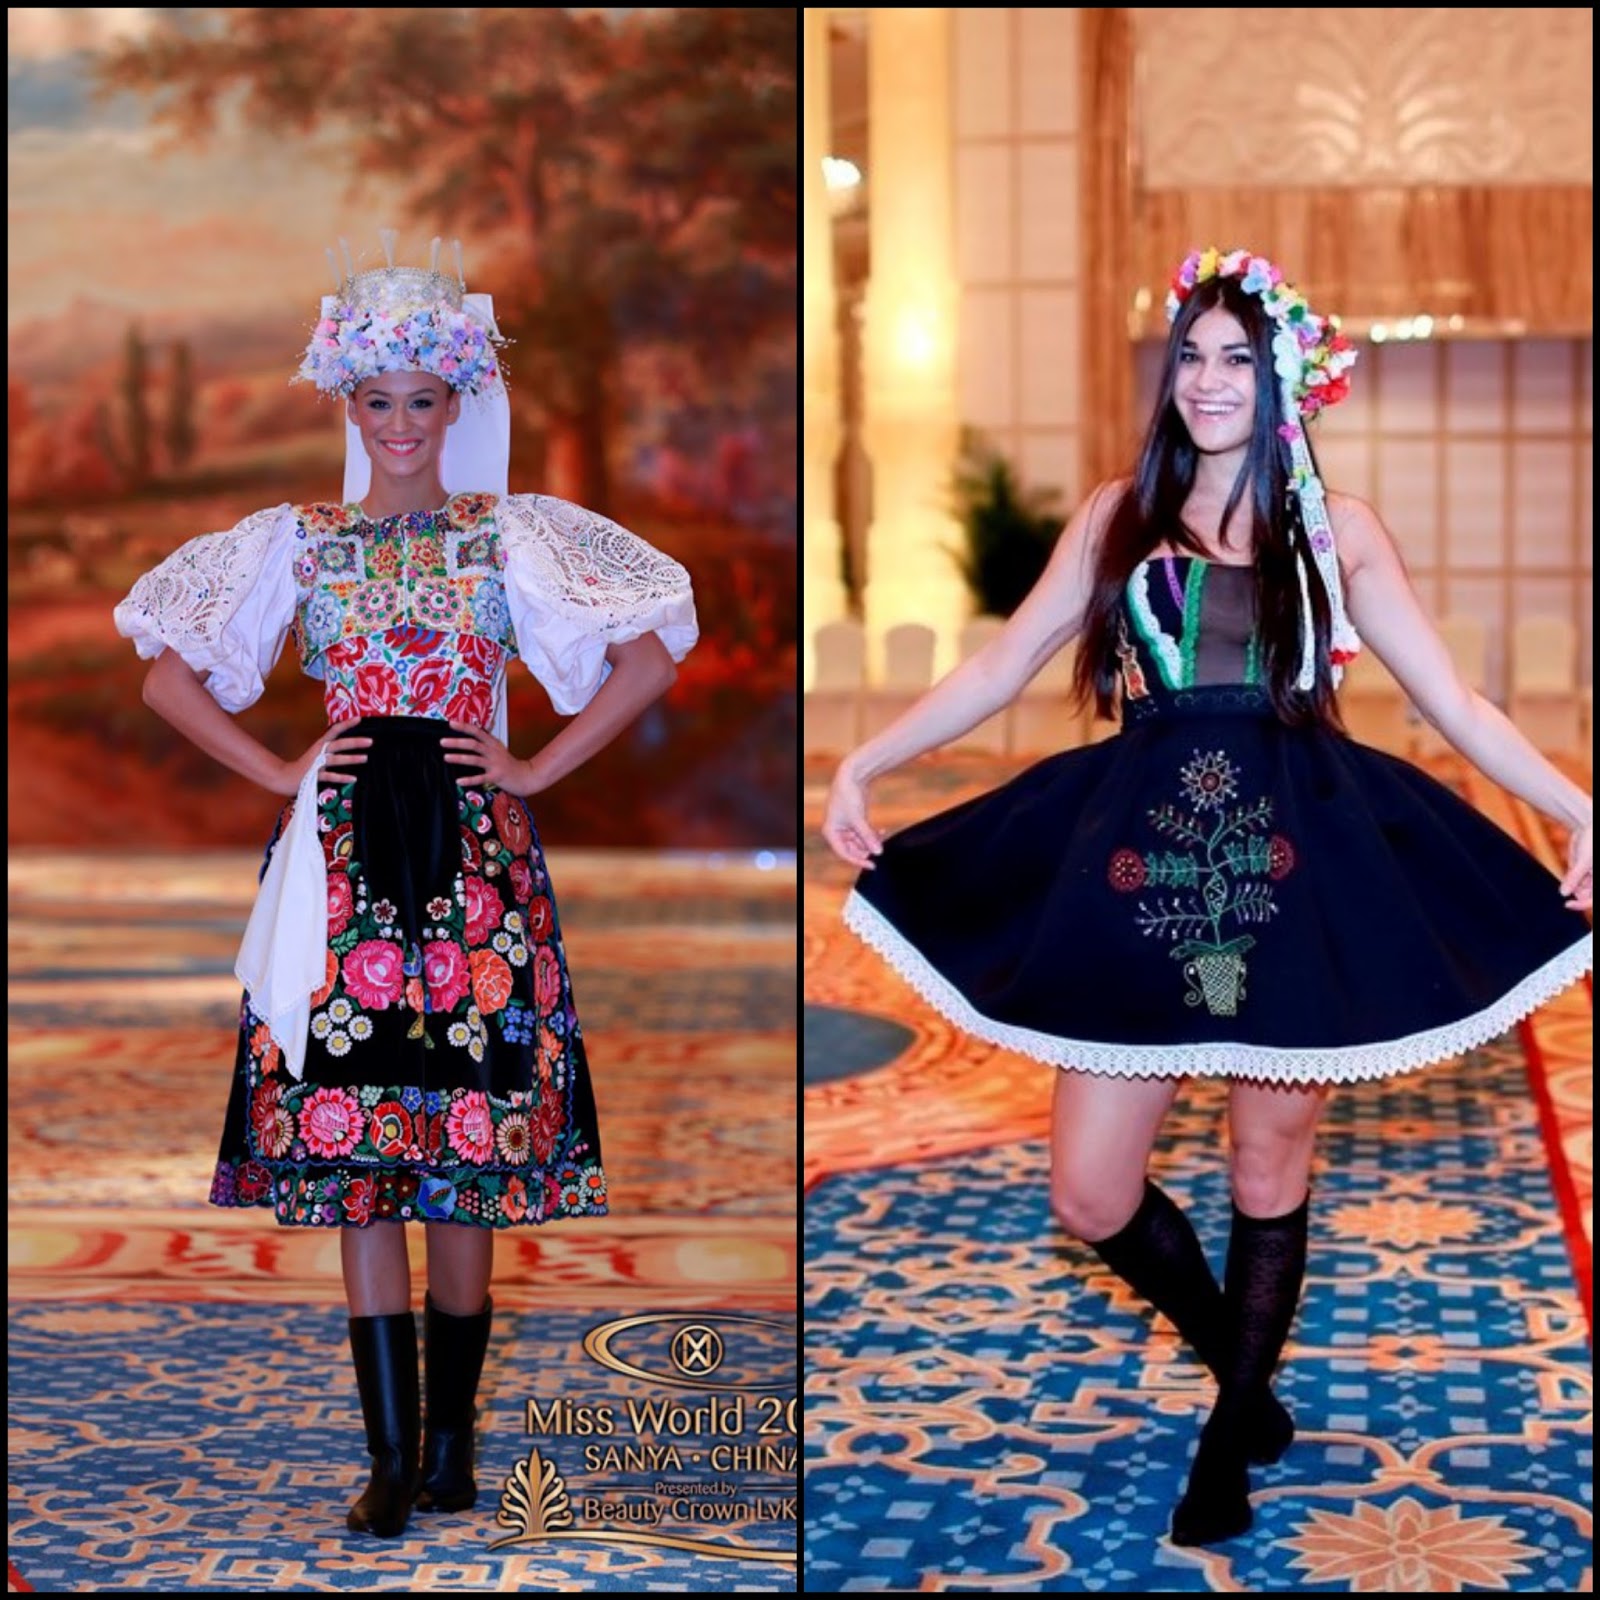 SASHES AND TIARASMiss World 2015 National Costumes 